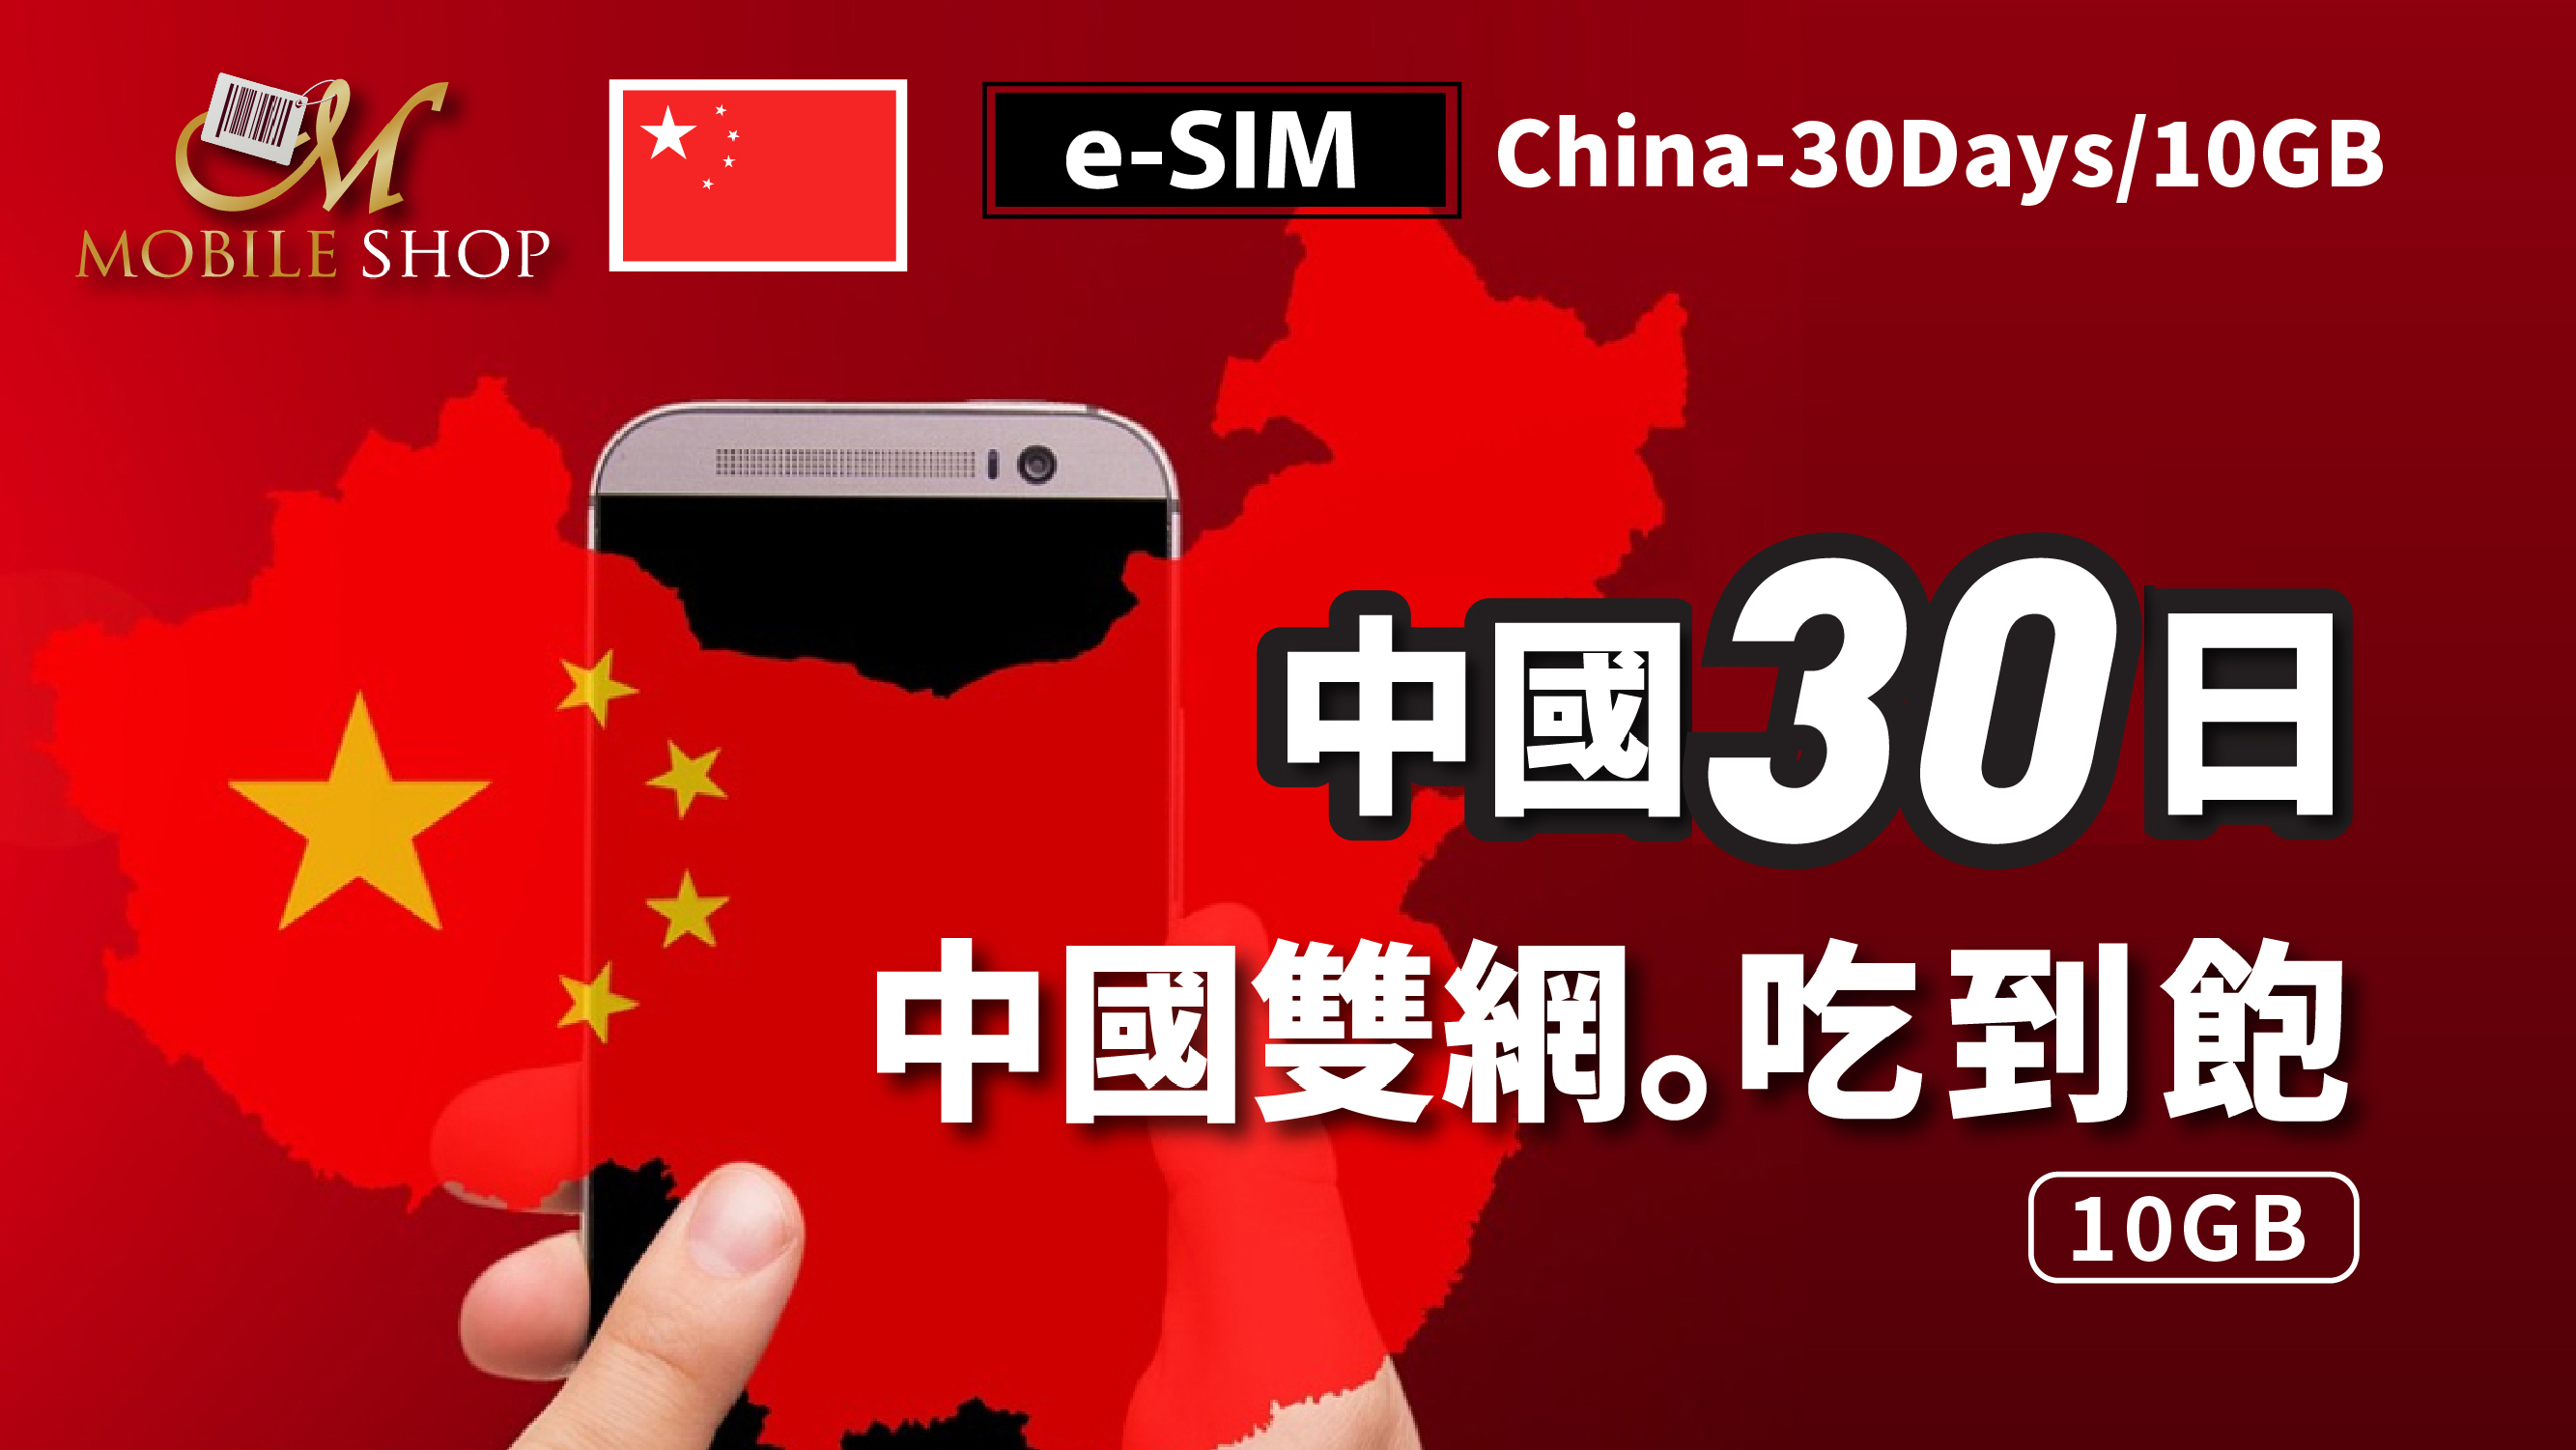 eSIM_China 30Days/10GB unlimited data